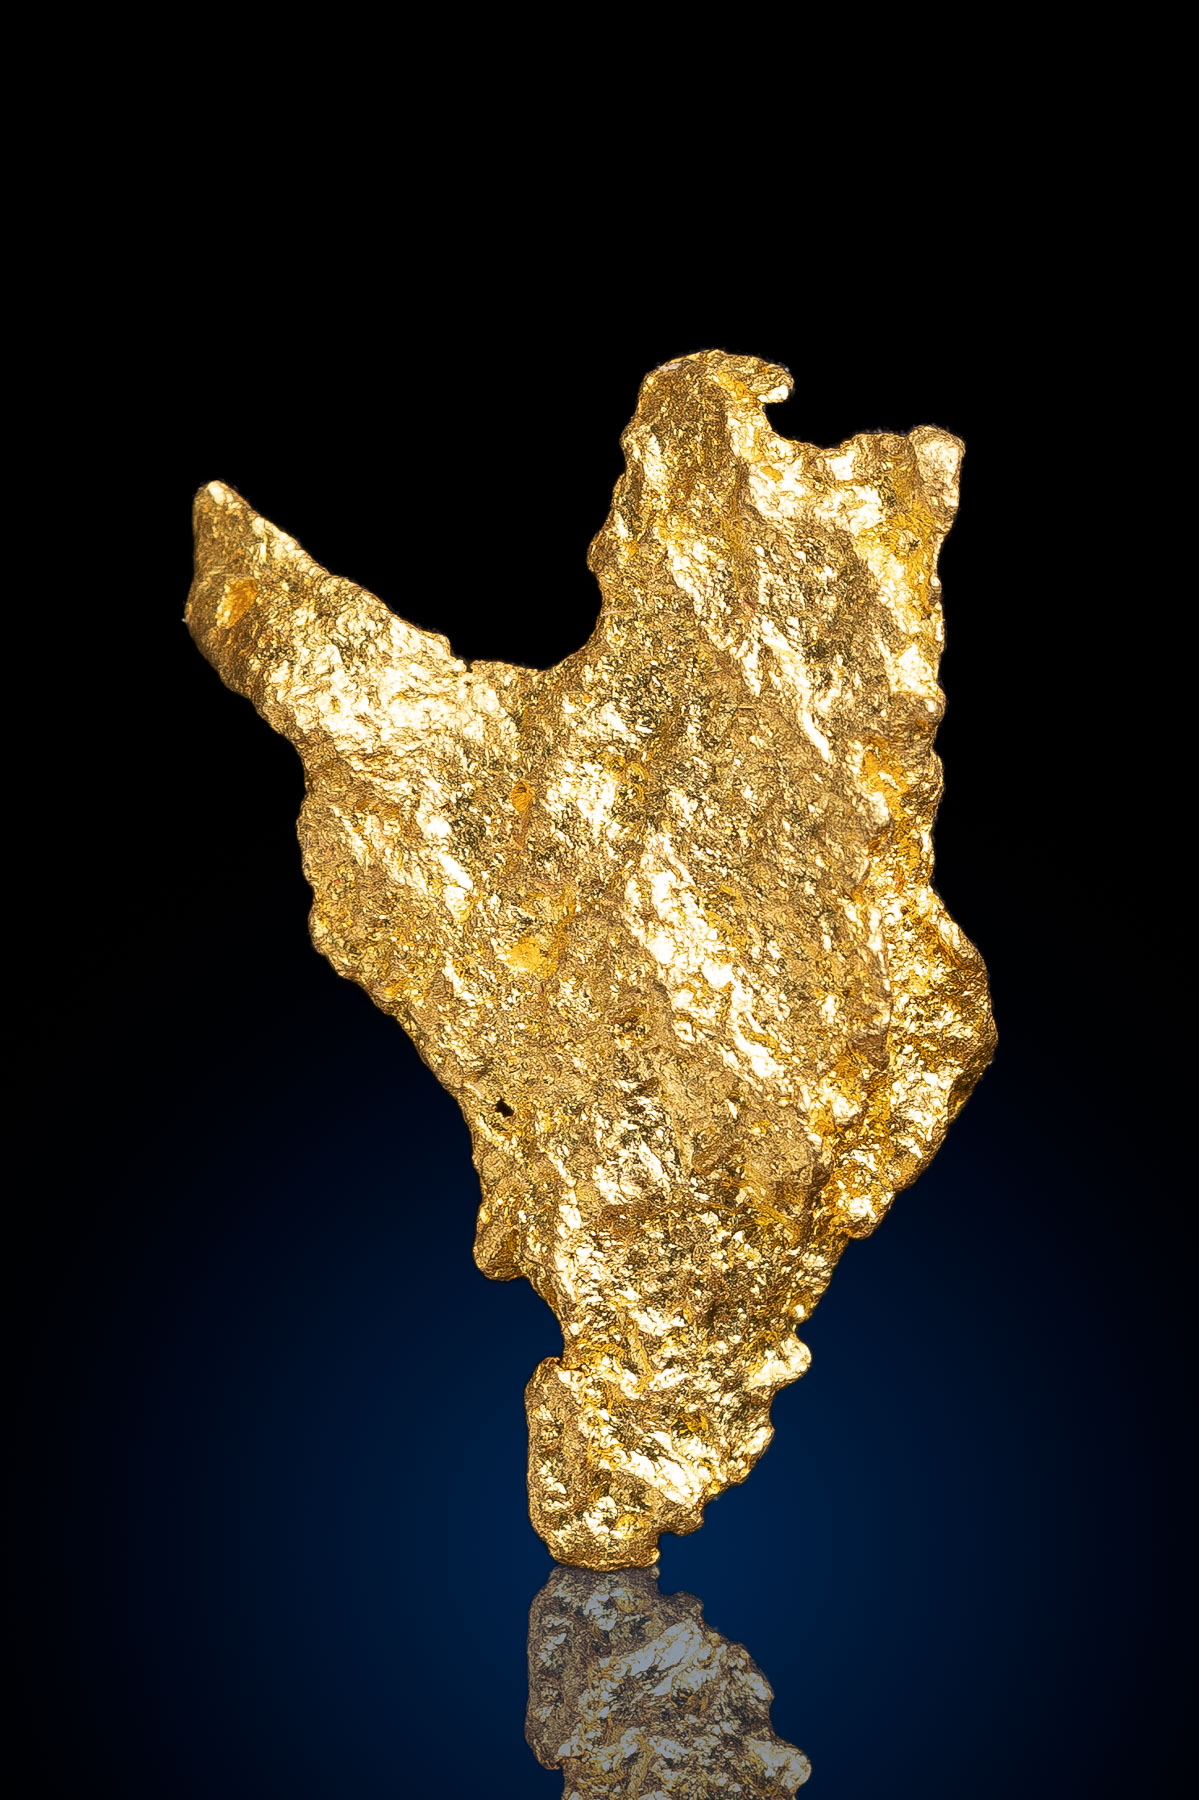 Tall Armed Australian Natural Gold Nugget - 7.44 grams